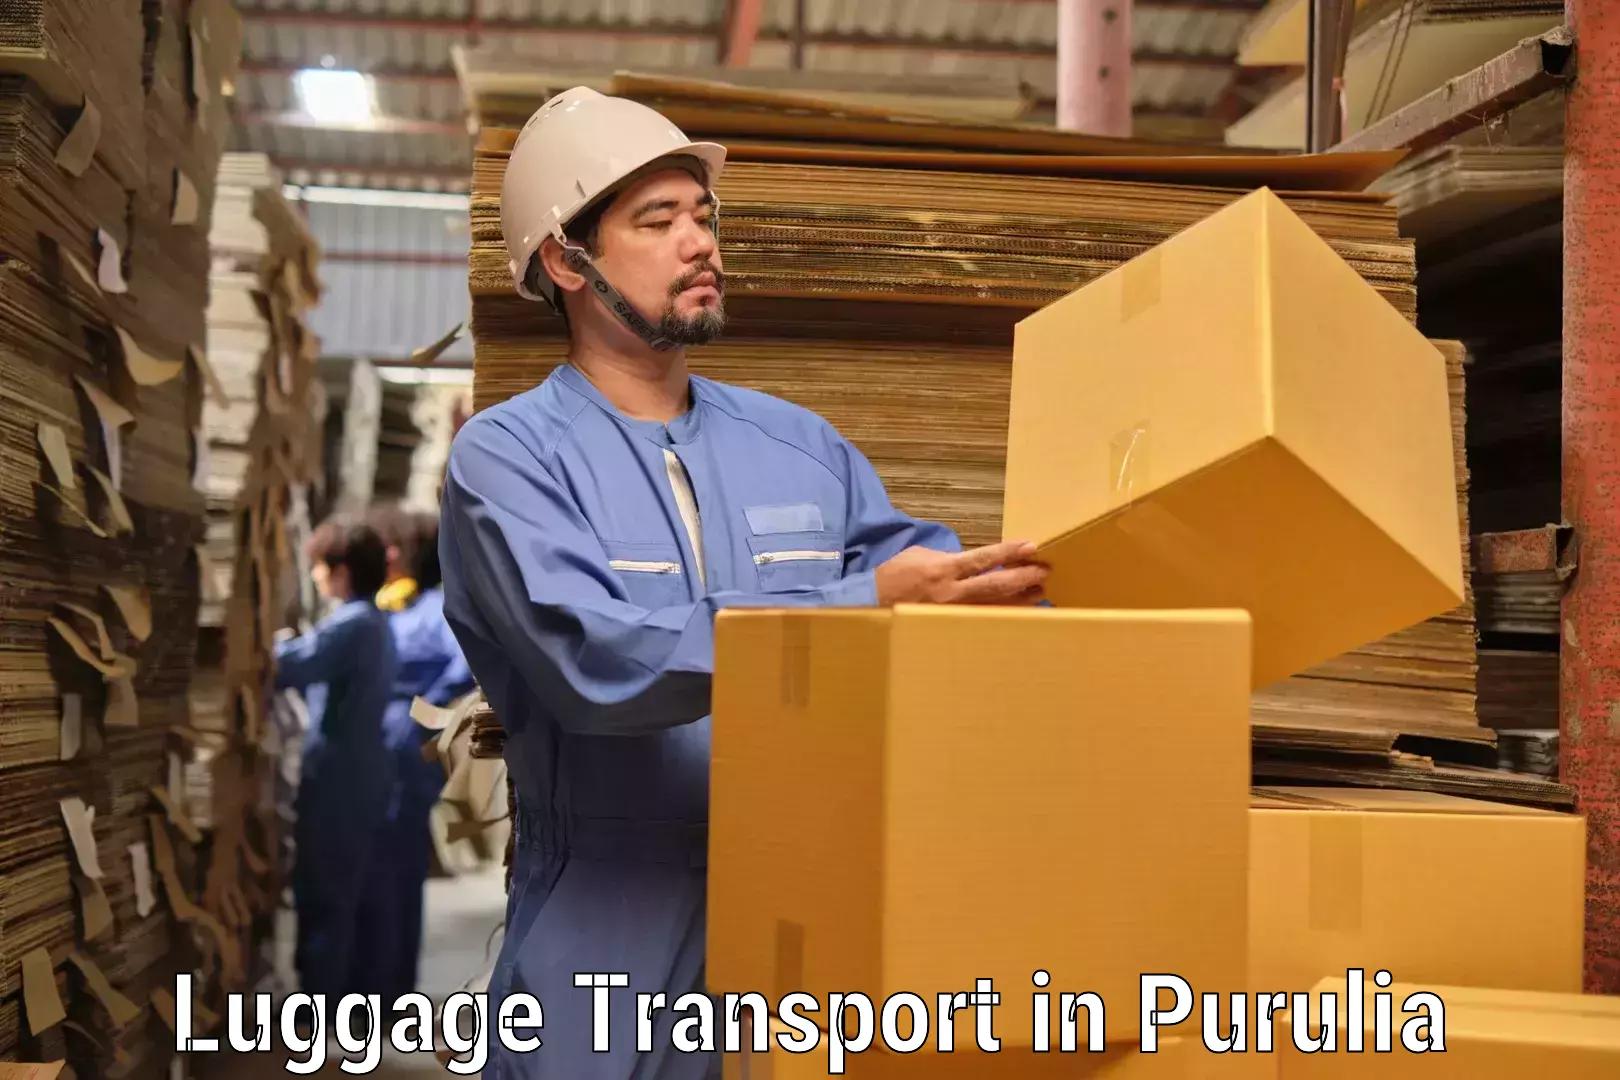 Professional baggage transport in Purulia